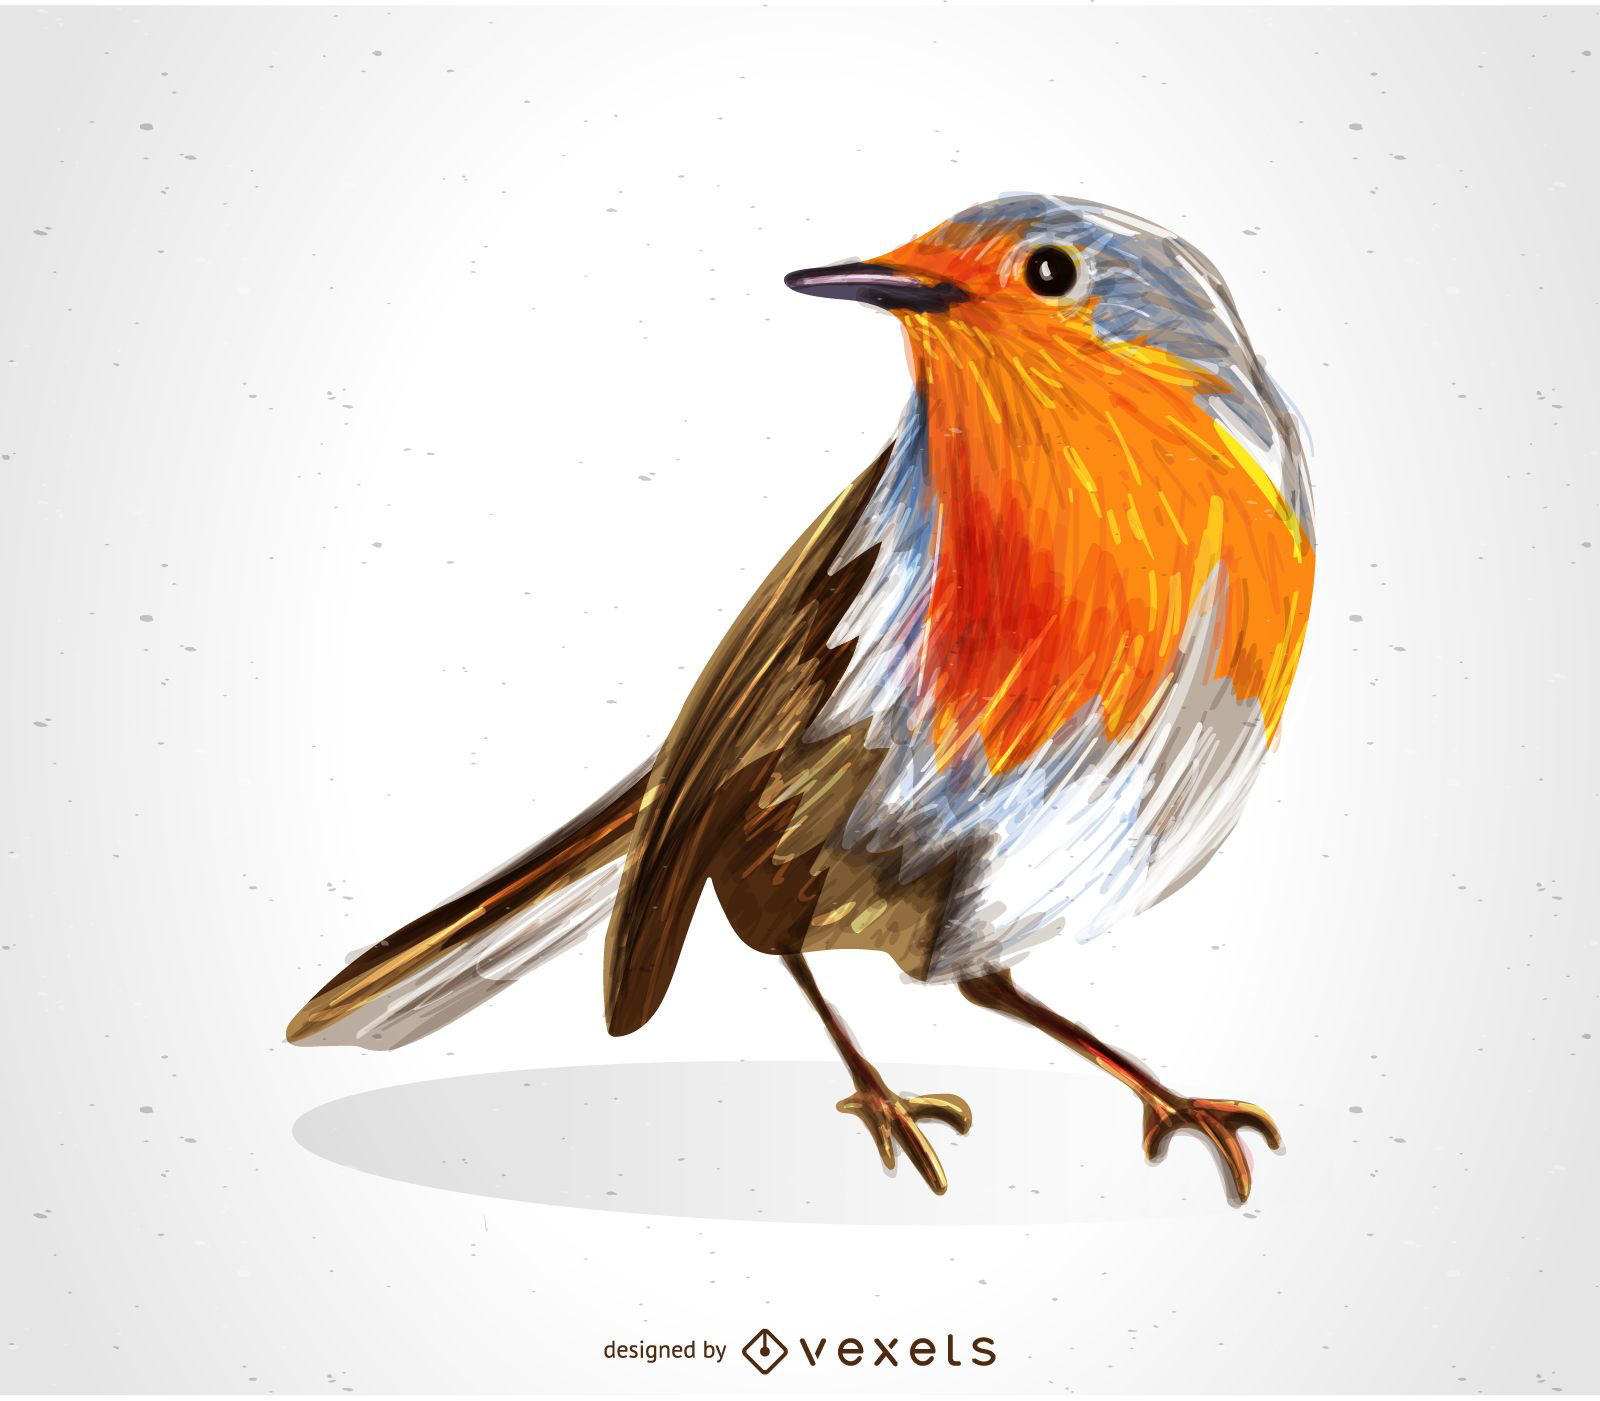 Redbreast robin bird drawing